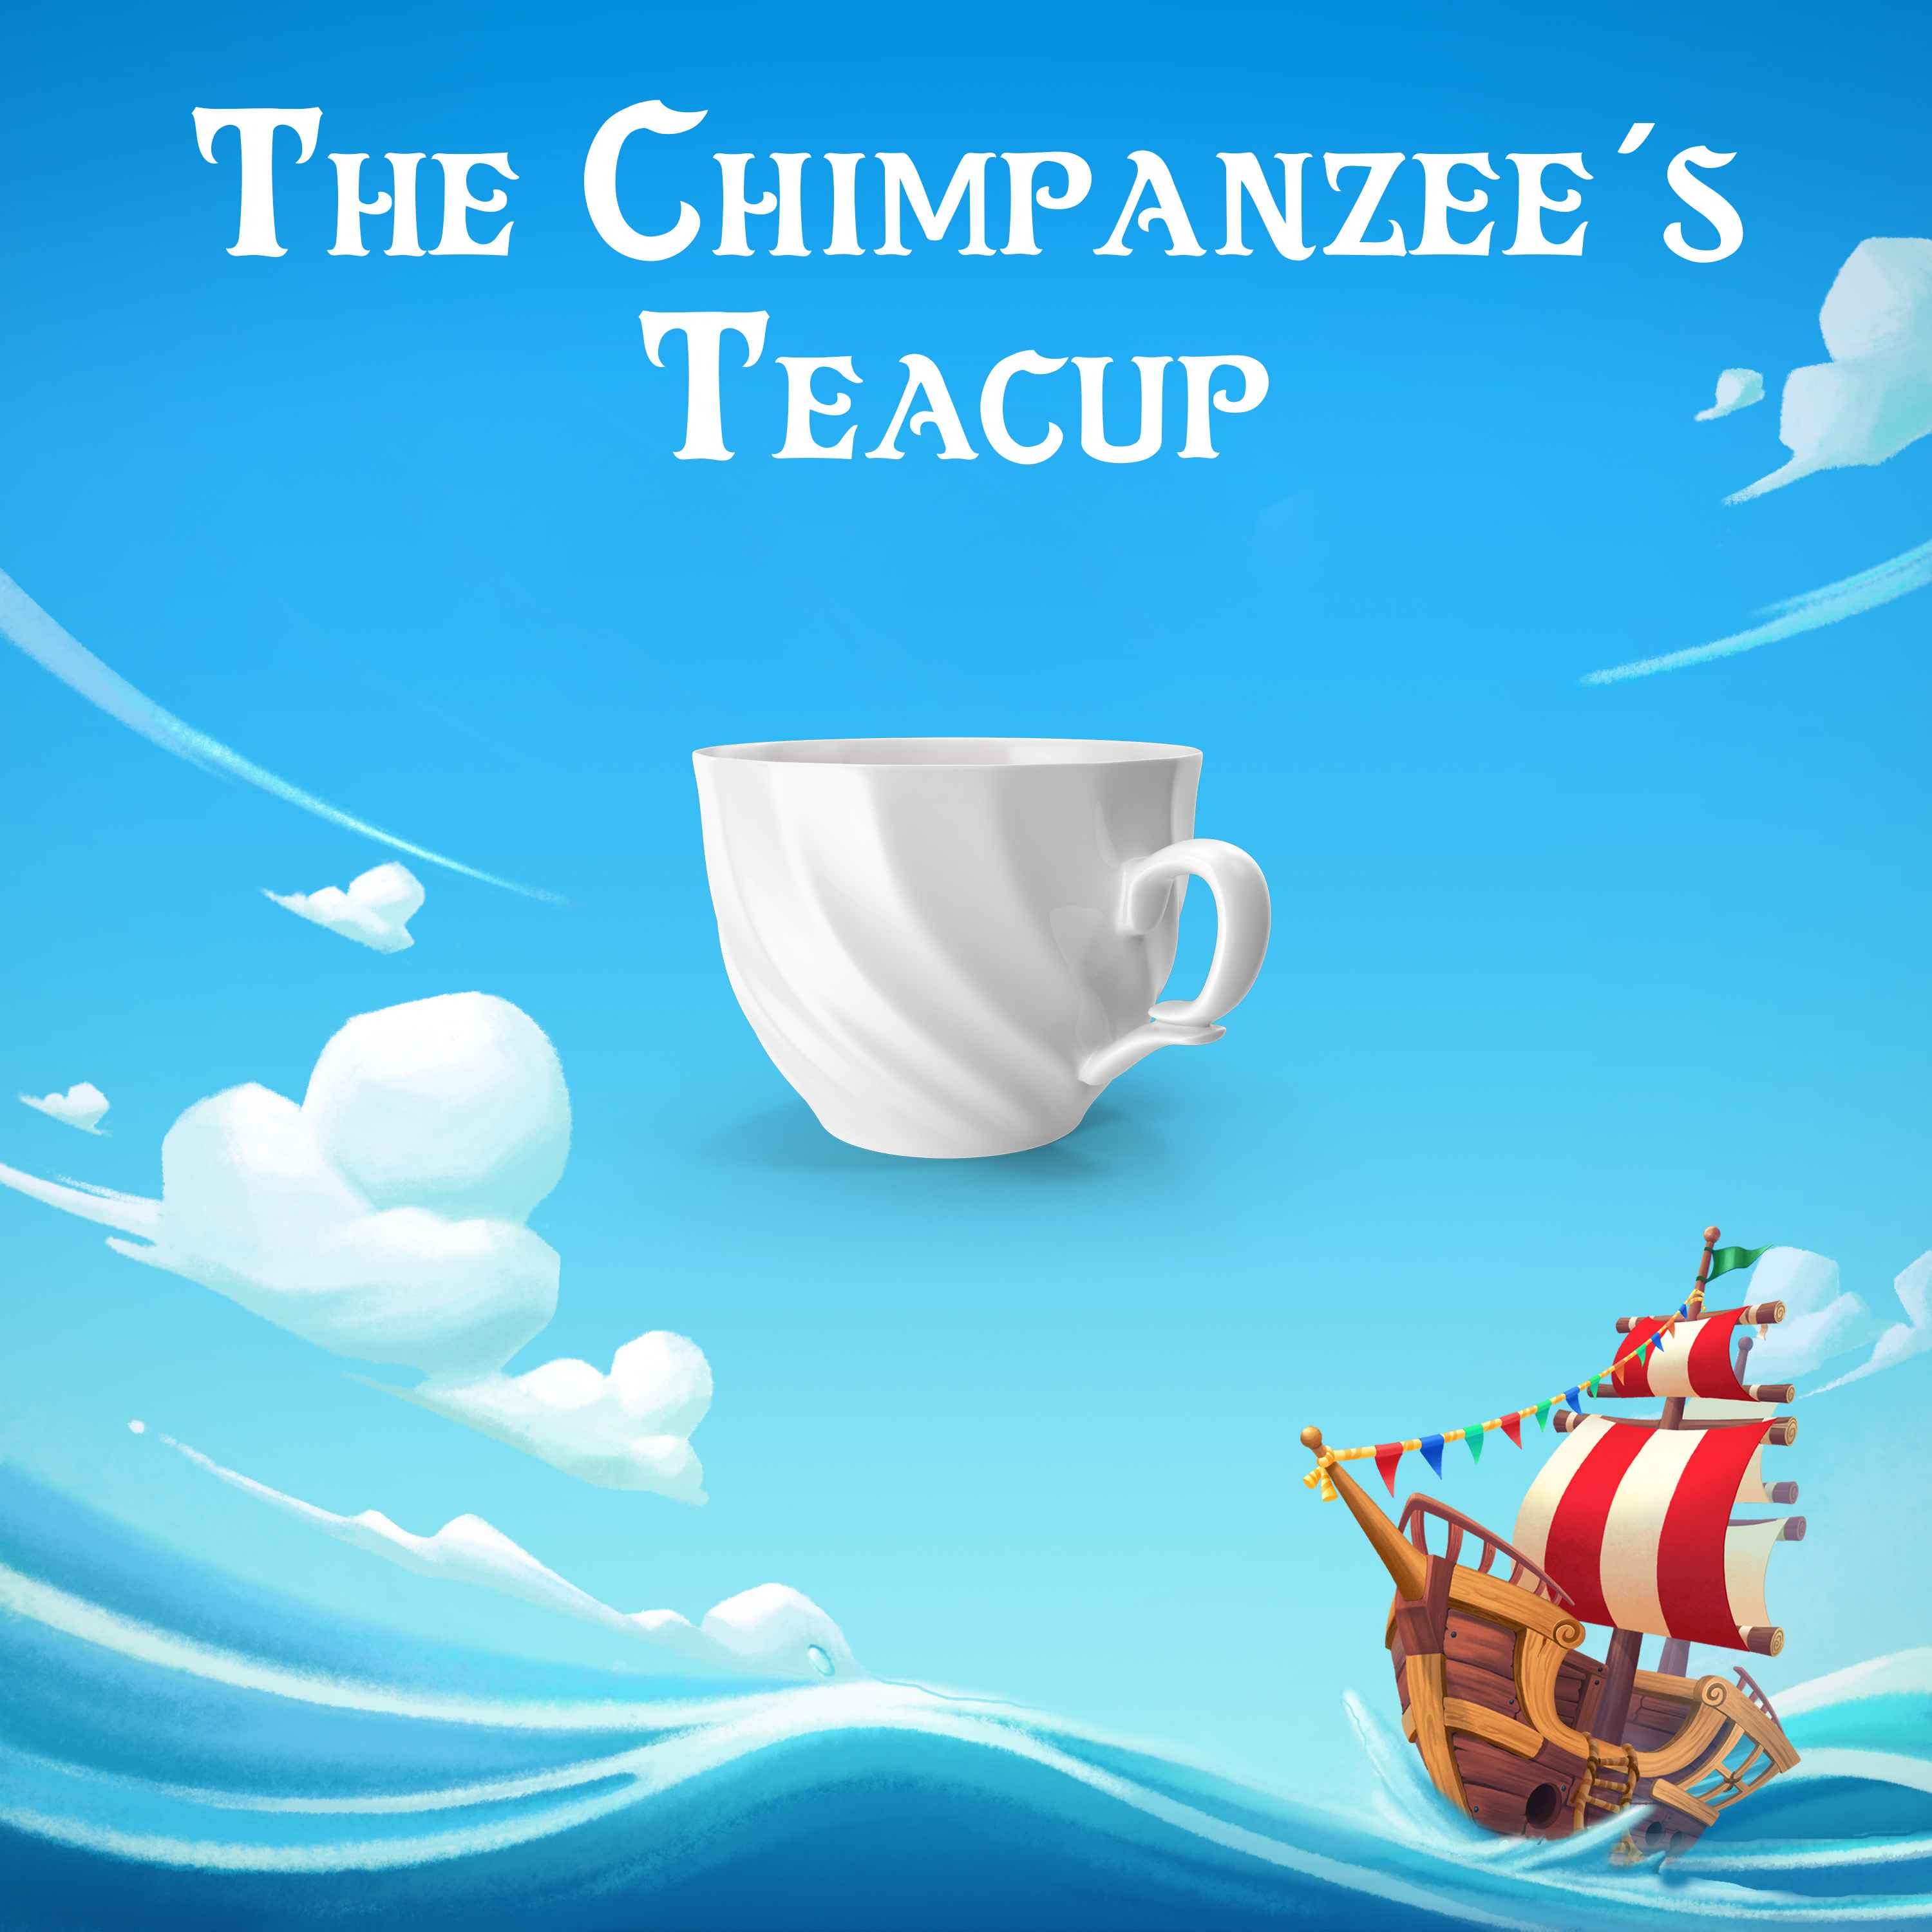 The Chimpanzee’s Teacup